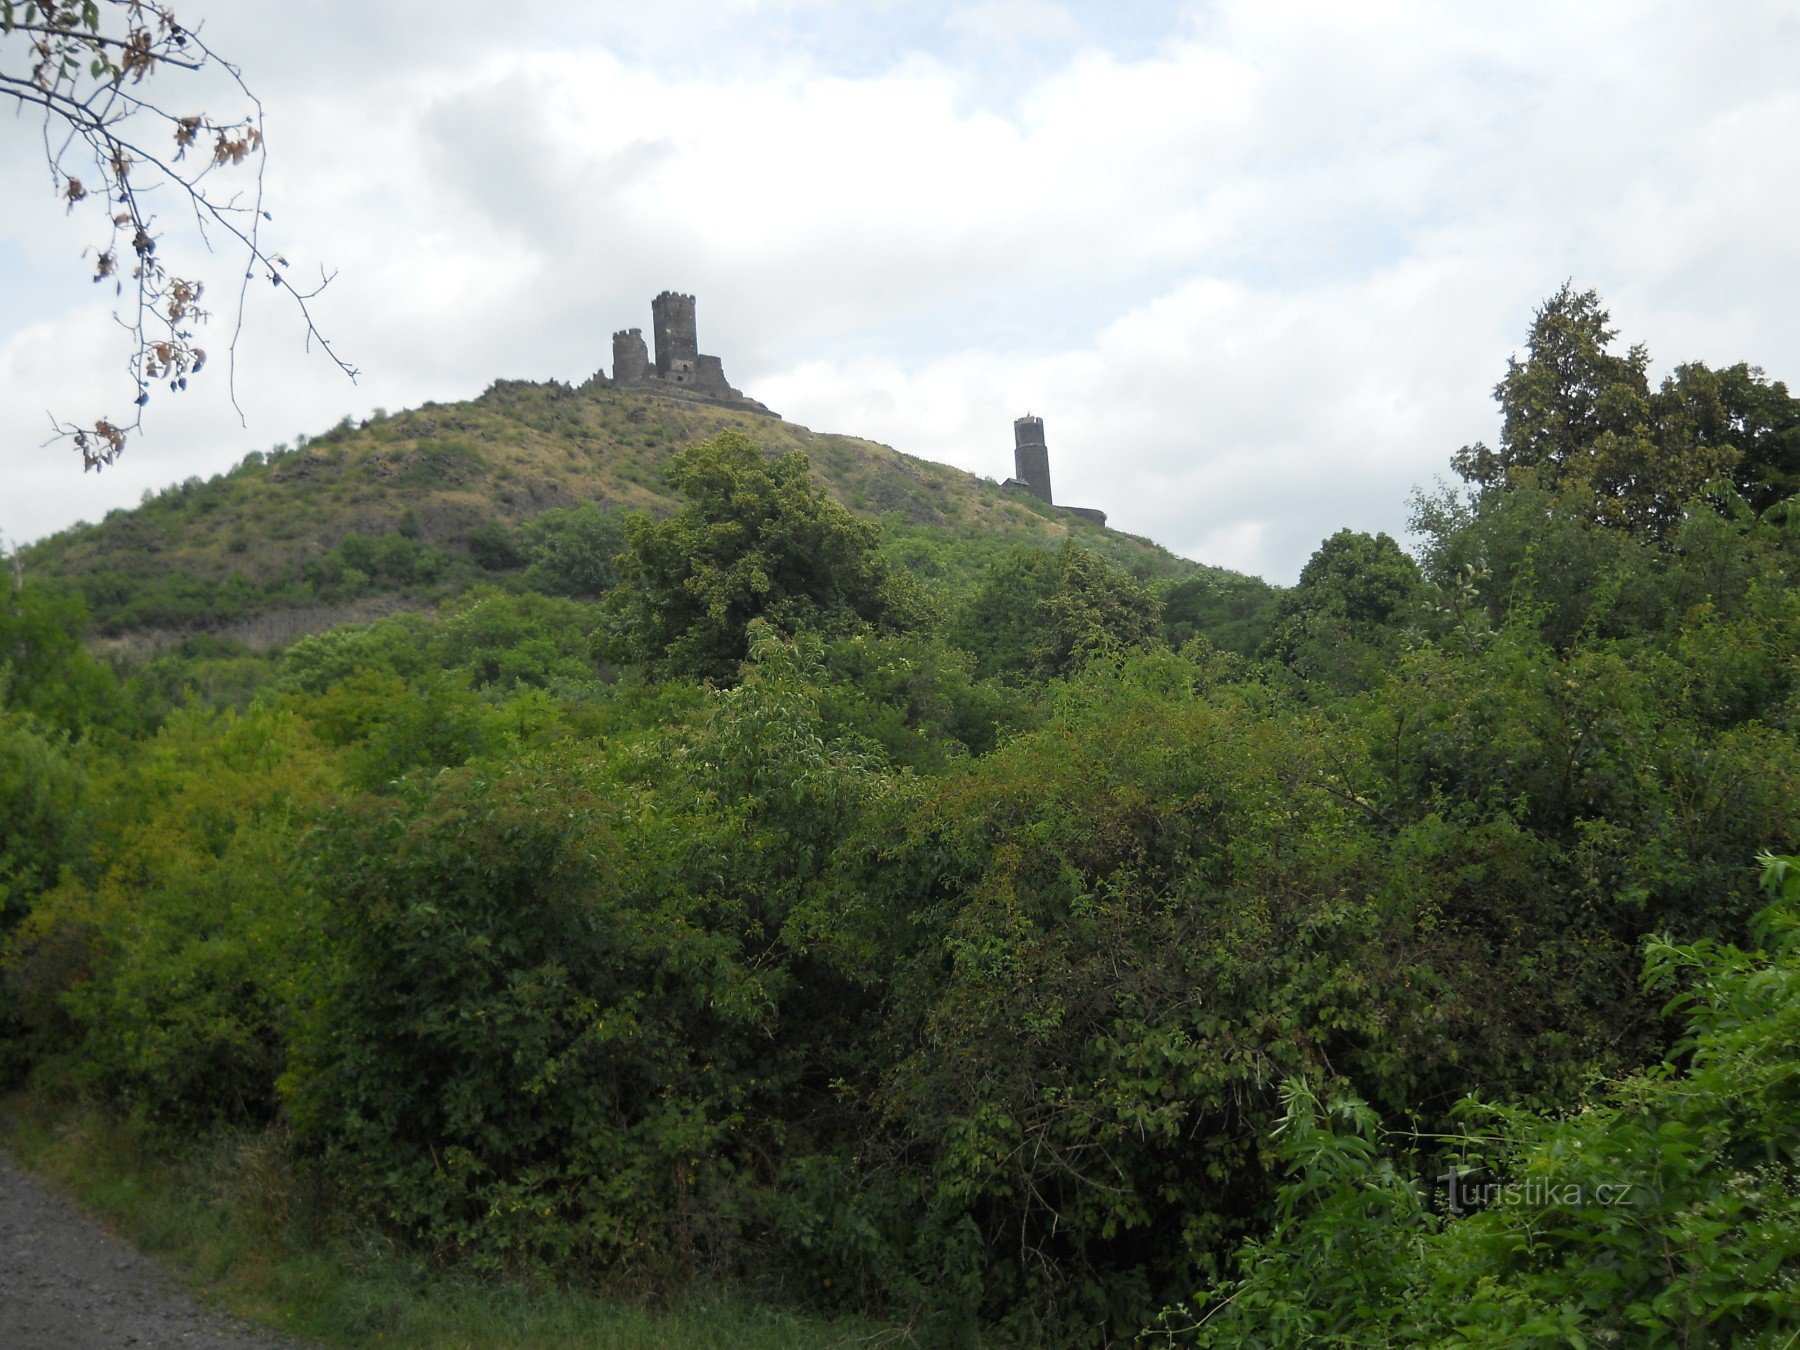 Ruinerna av Hazmburk Castle